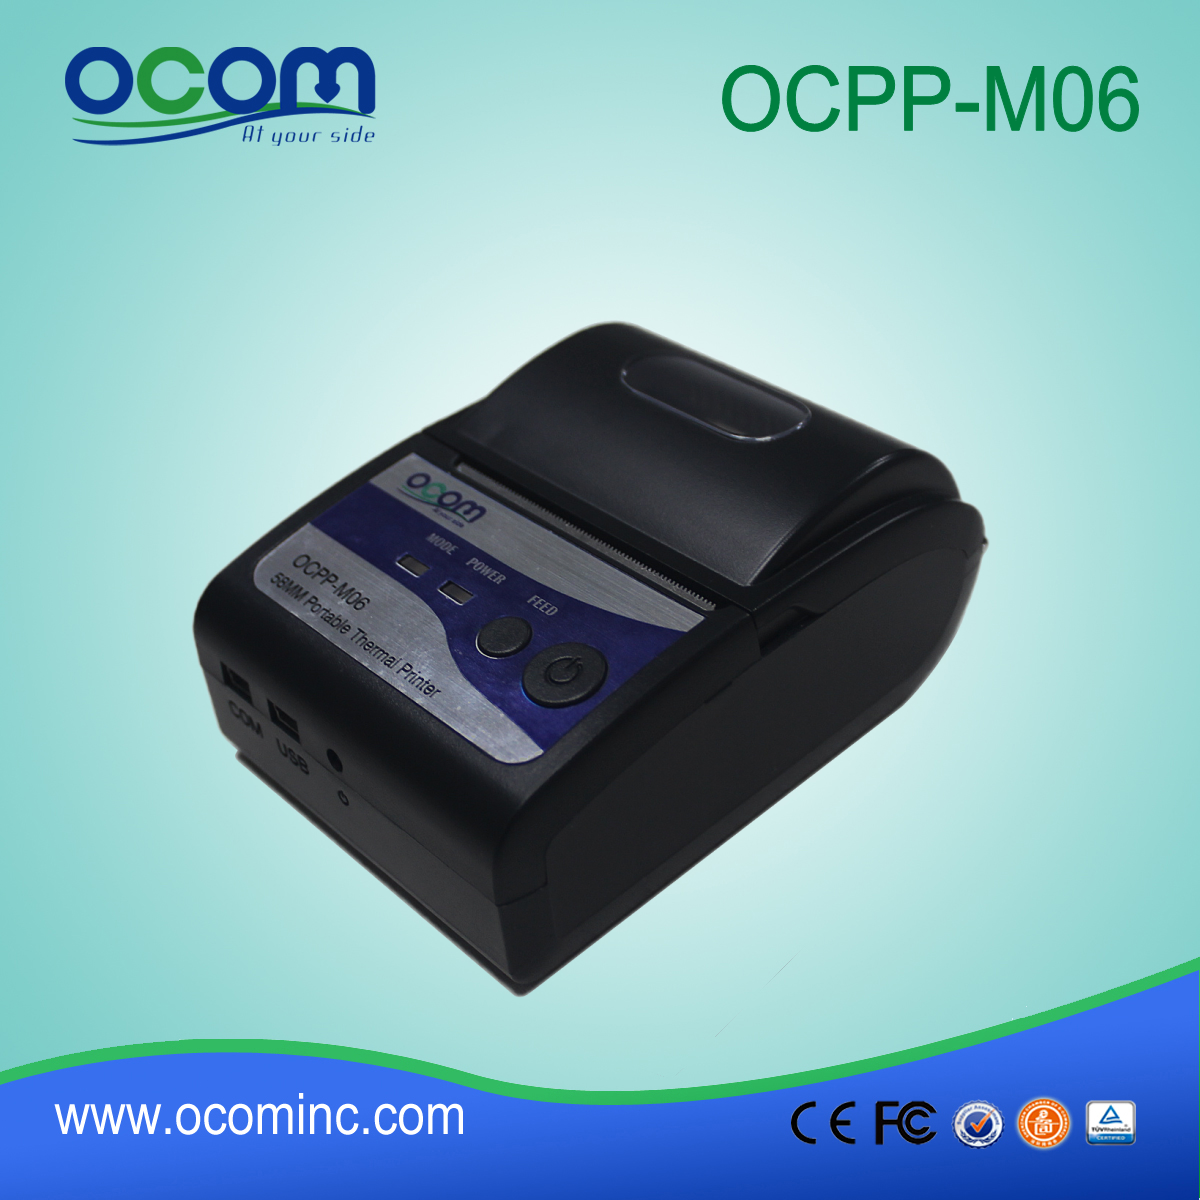 (OCPP-M06) China fabriek OCOM 58mm thermische printer, thermische printer goedkoop